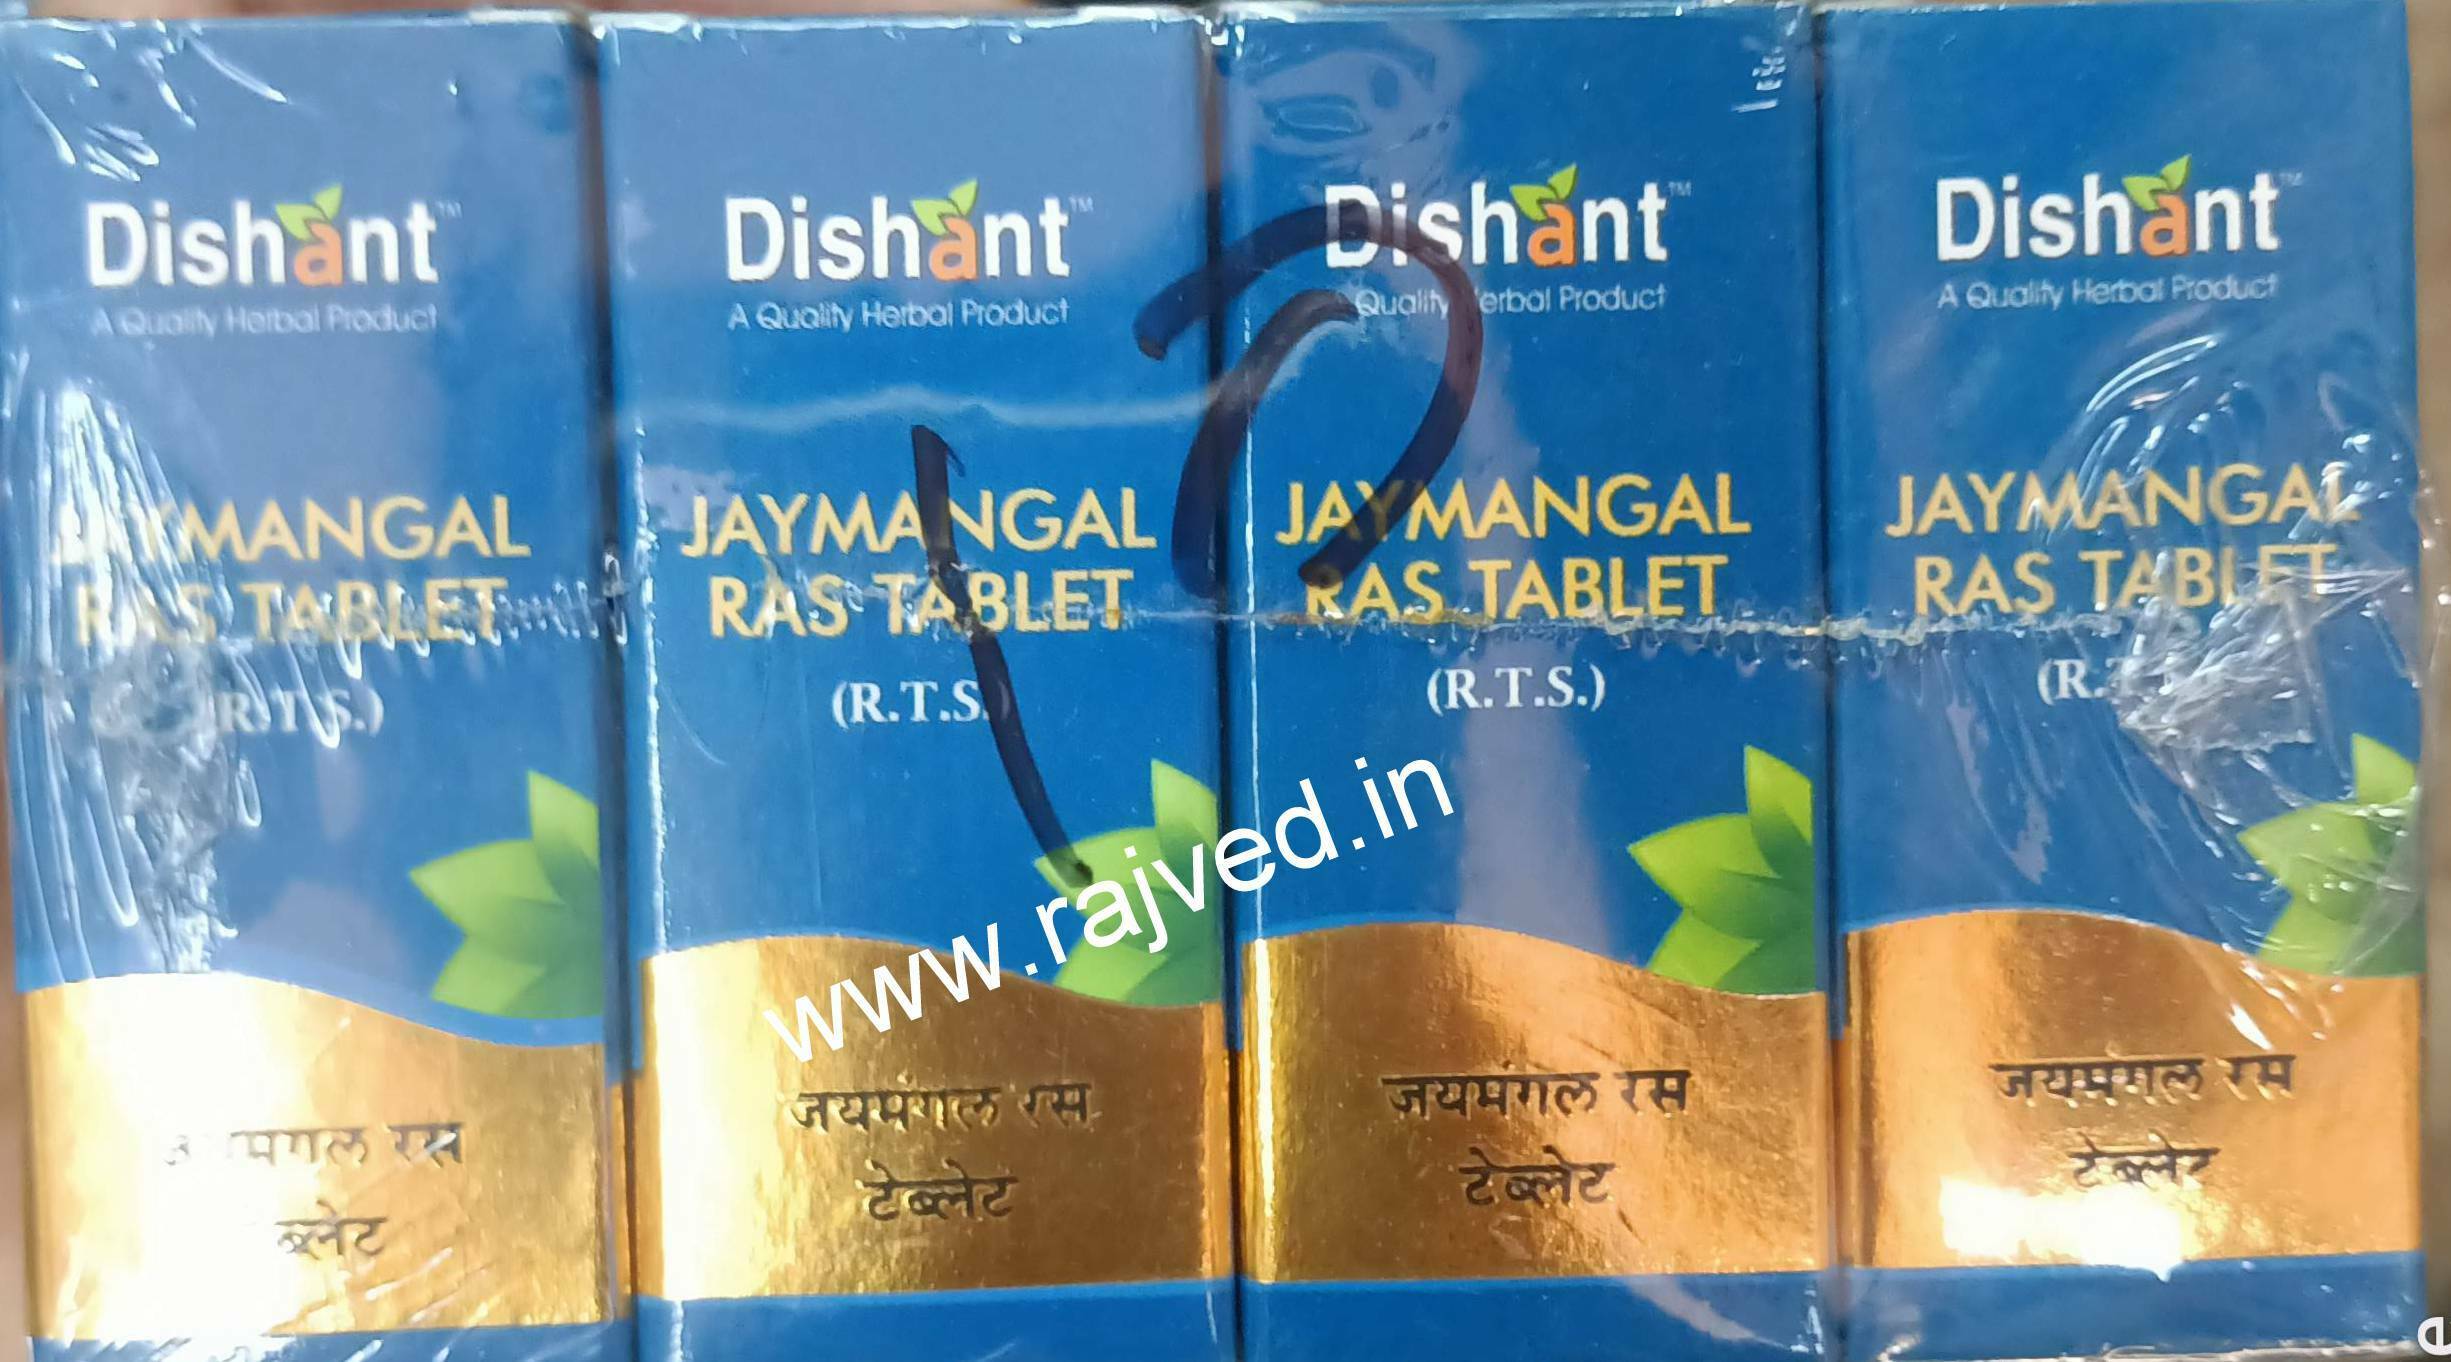 jaymangal ras tablets gold 30 tab upto 20% off dishant ayurvedic suppliers